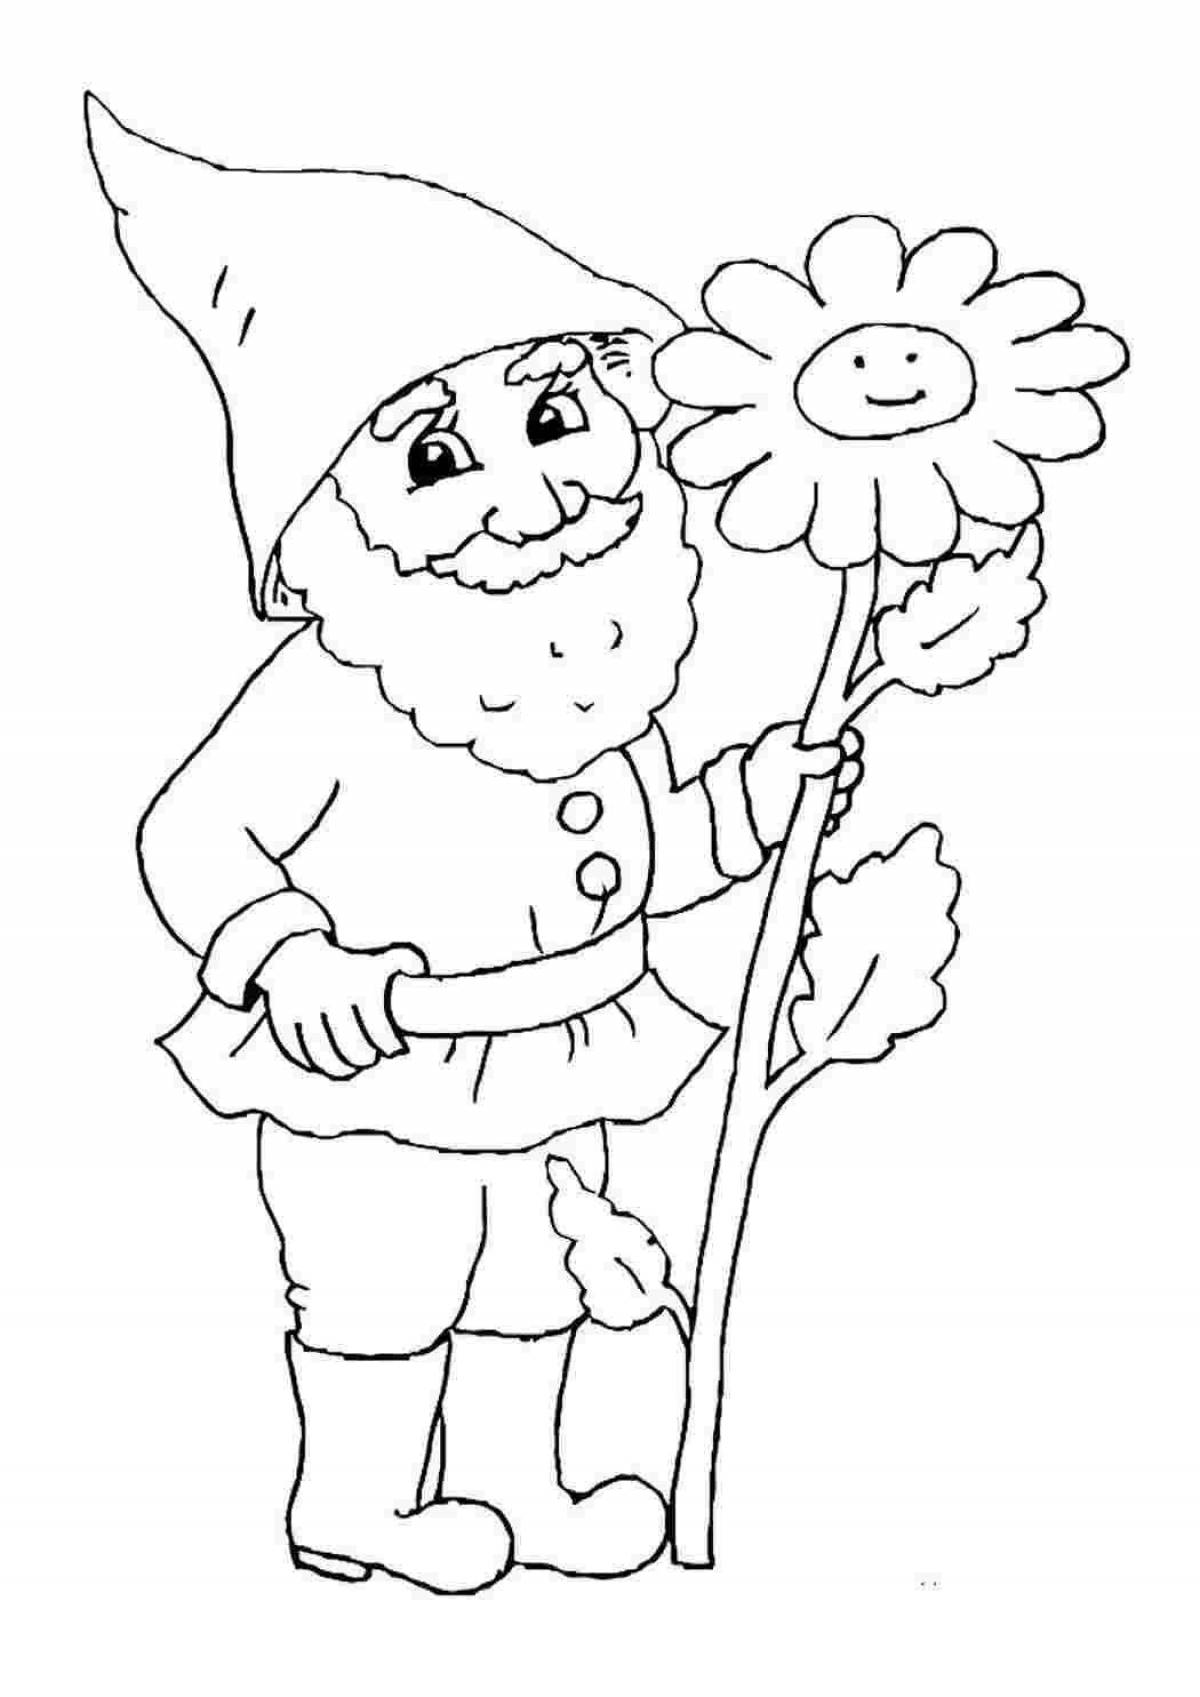 Charming lumberjack coloring book for kids